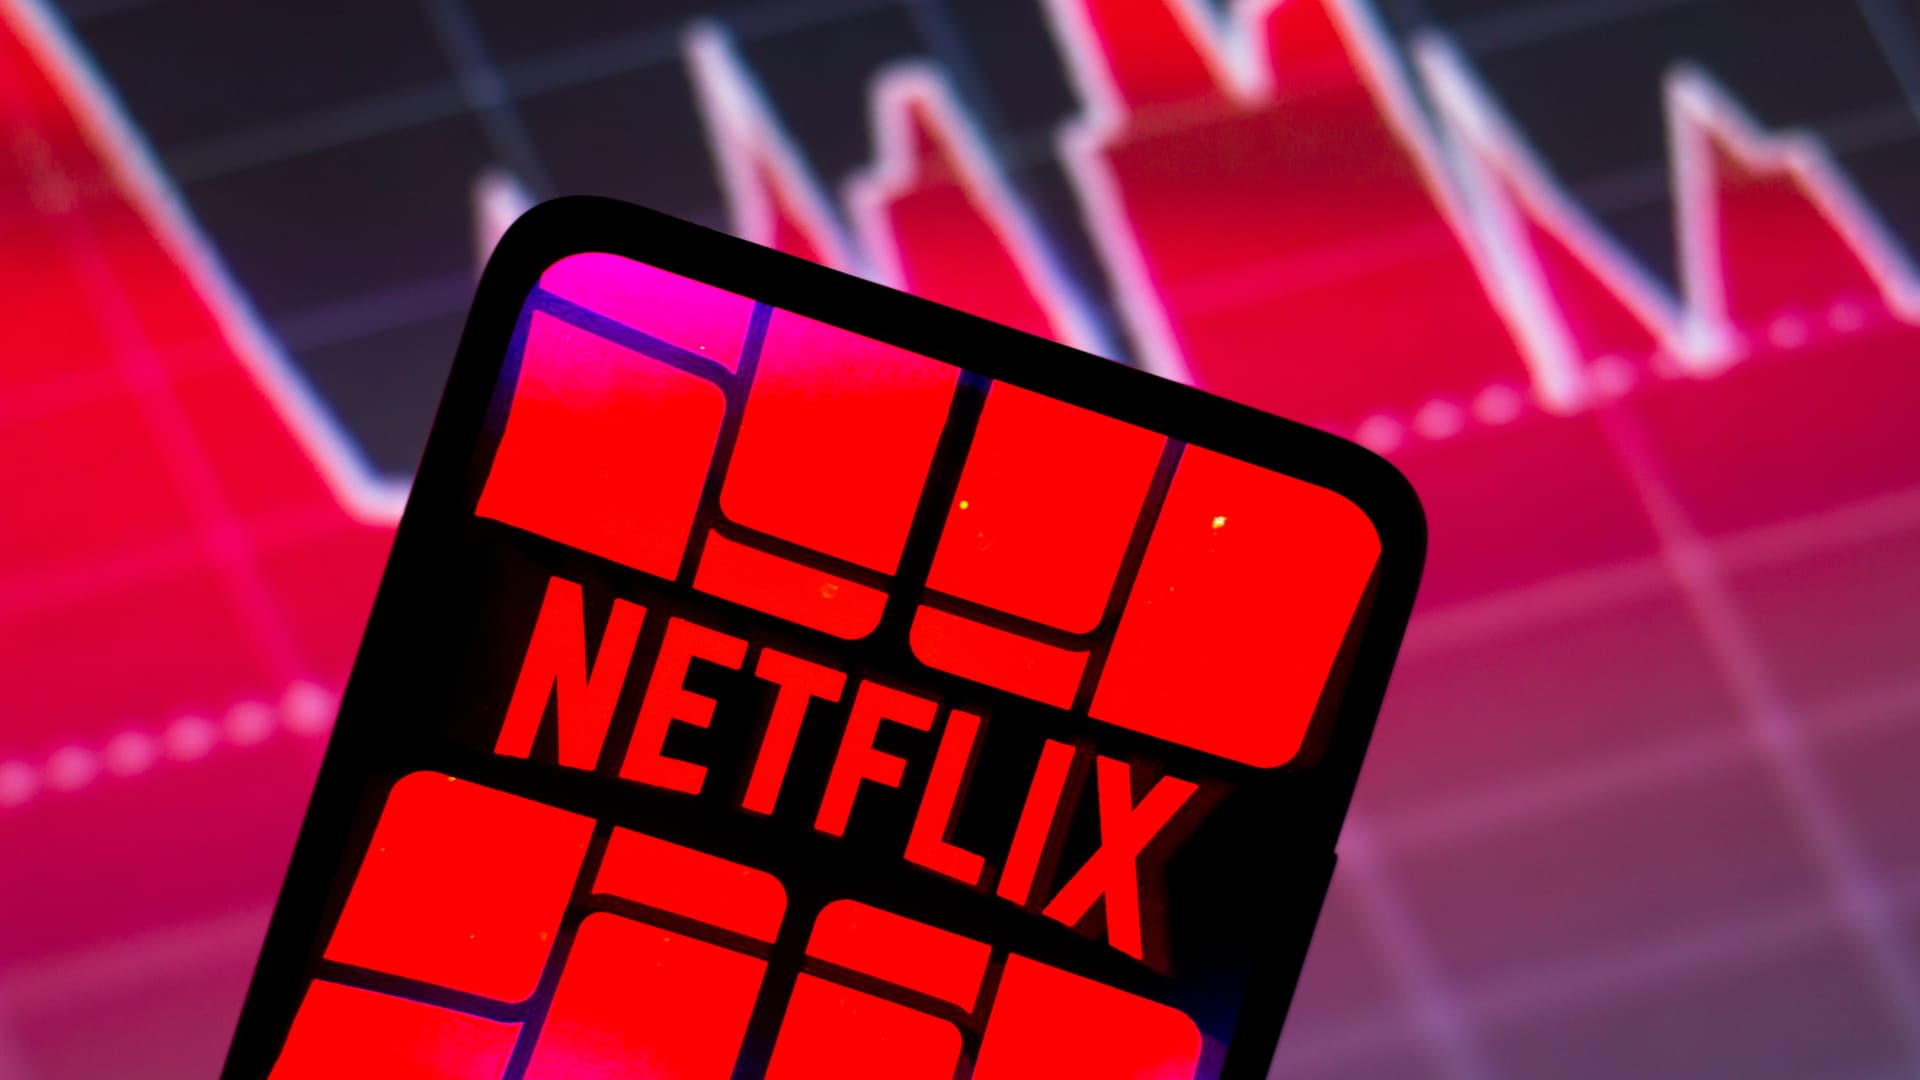 Will Netflix keep losing subscribers? Investors await guidance